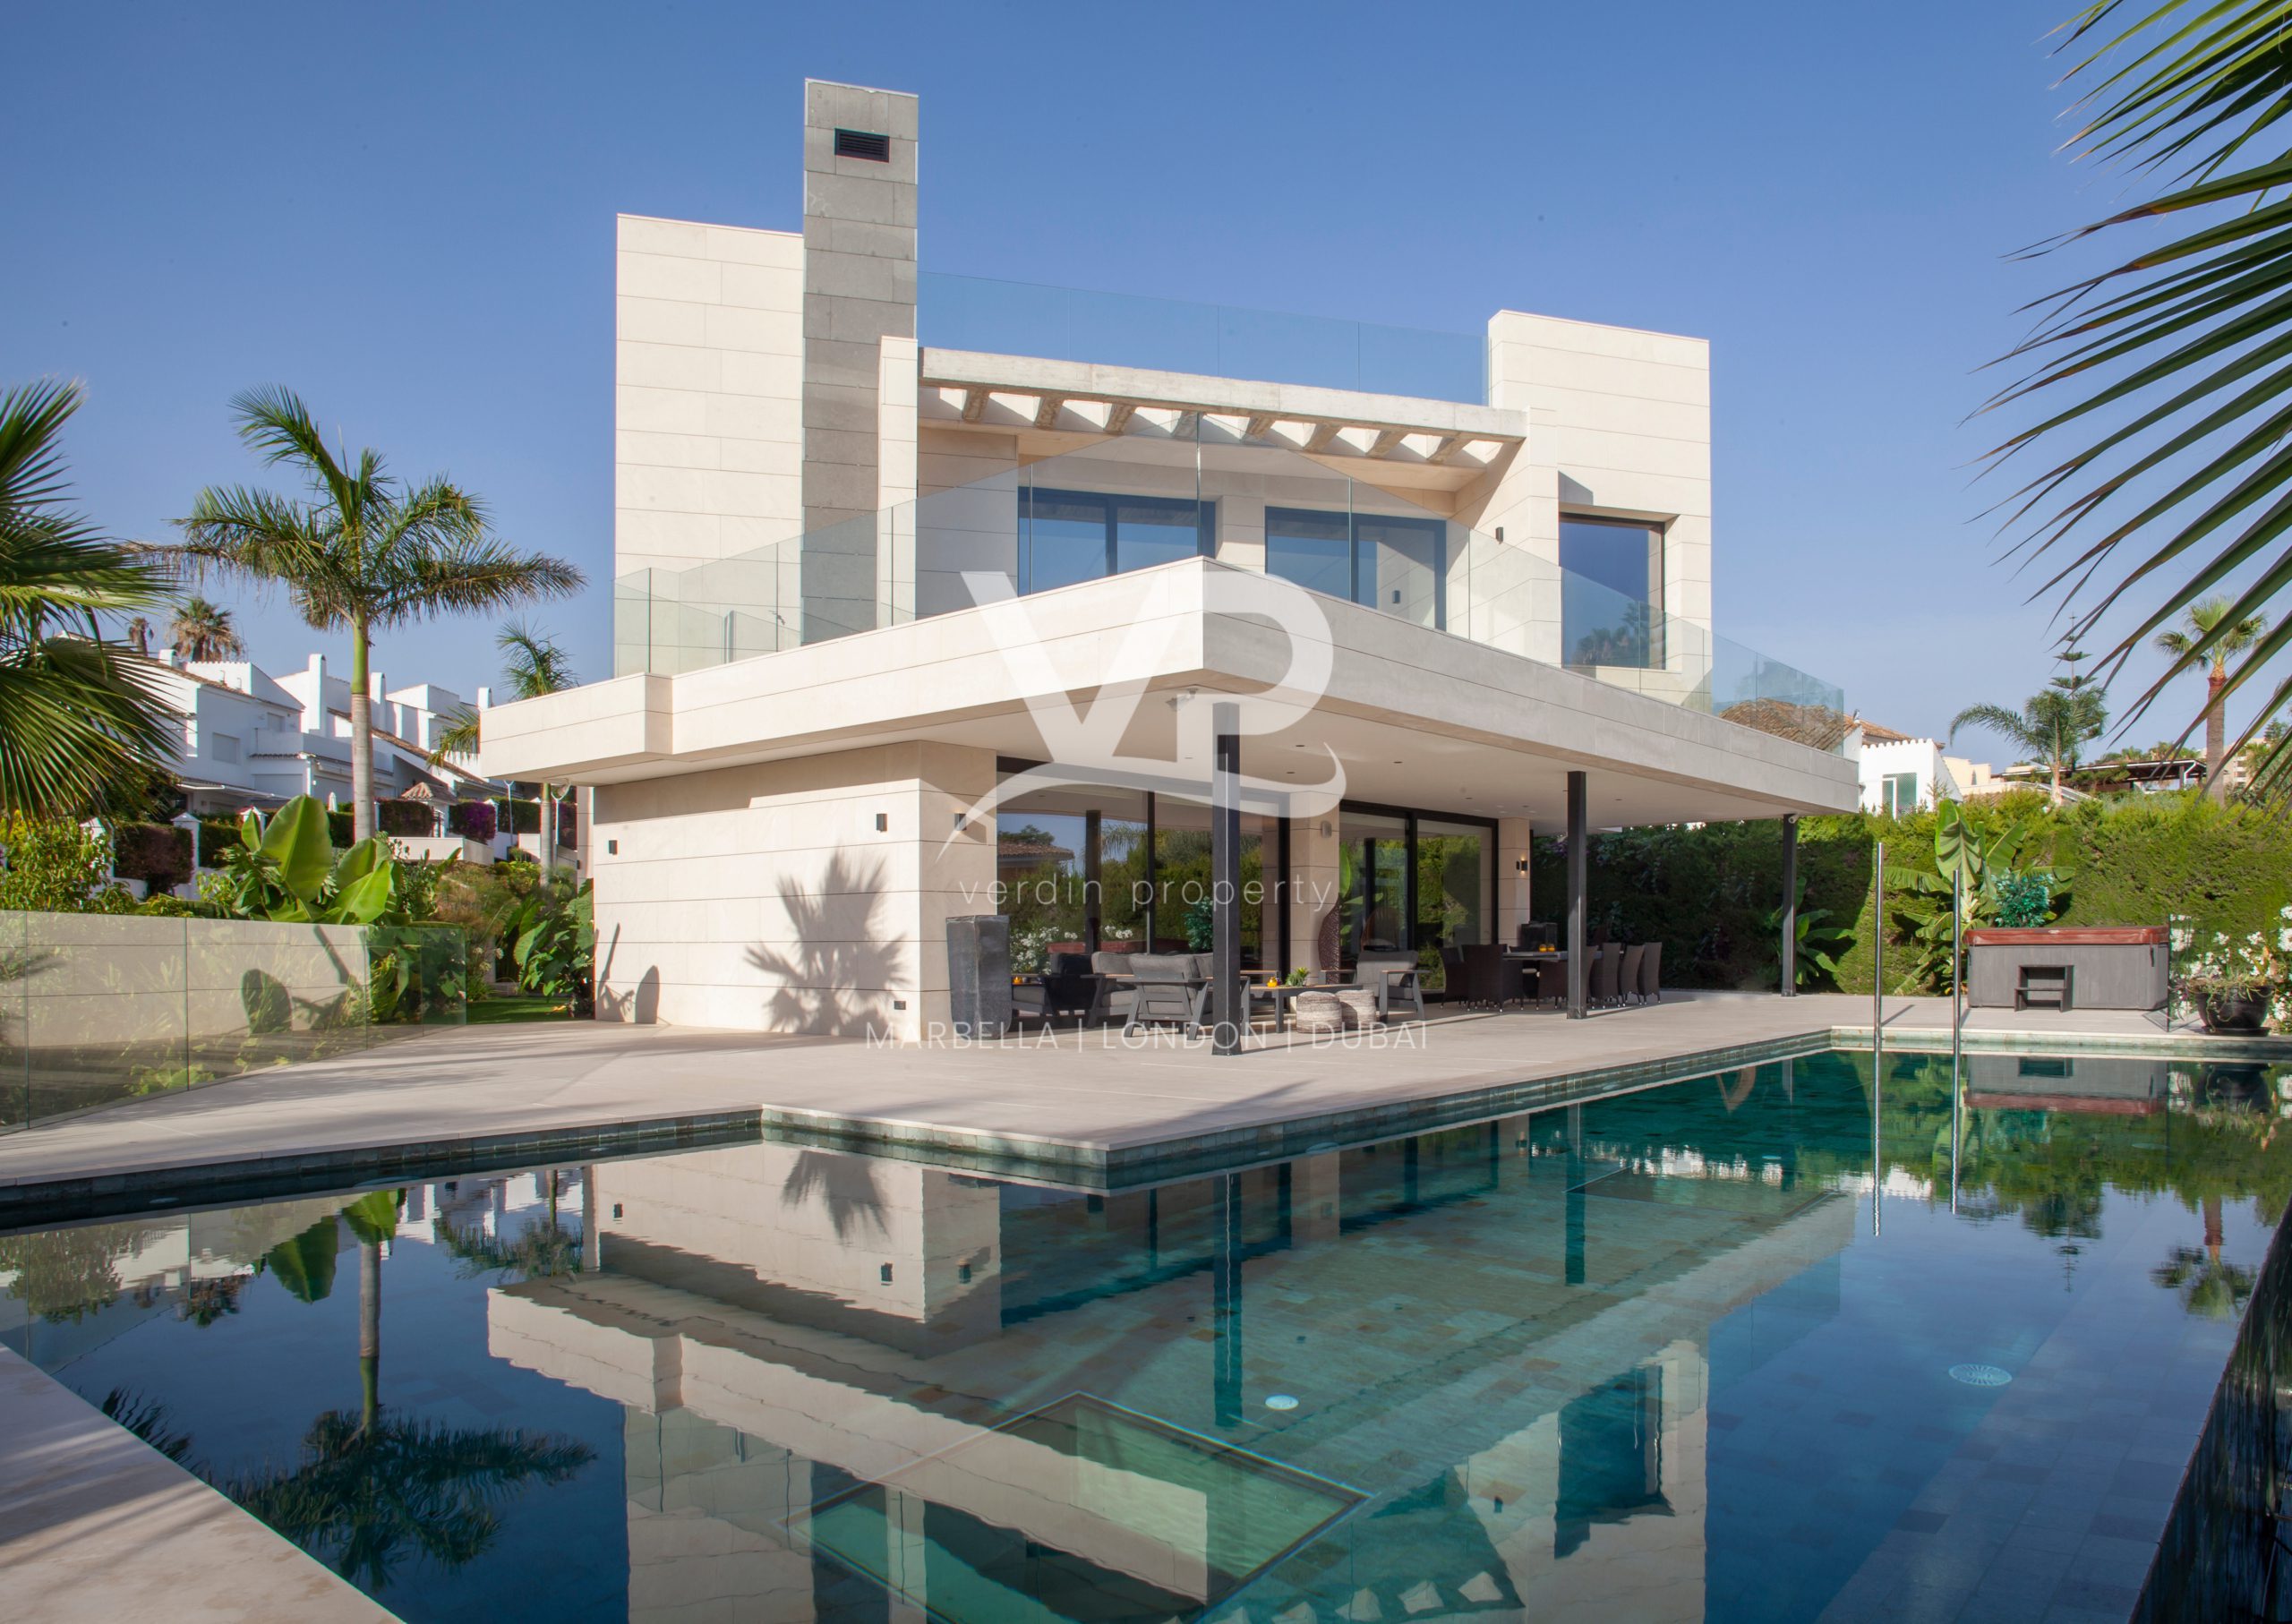 Brand new villa in Parcelas Del Golf - Verdin Property